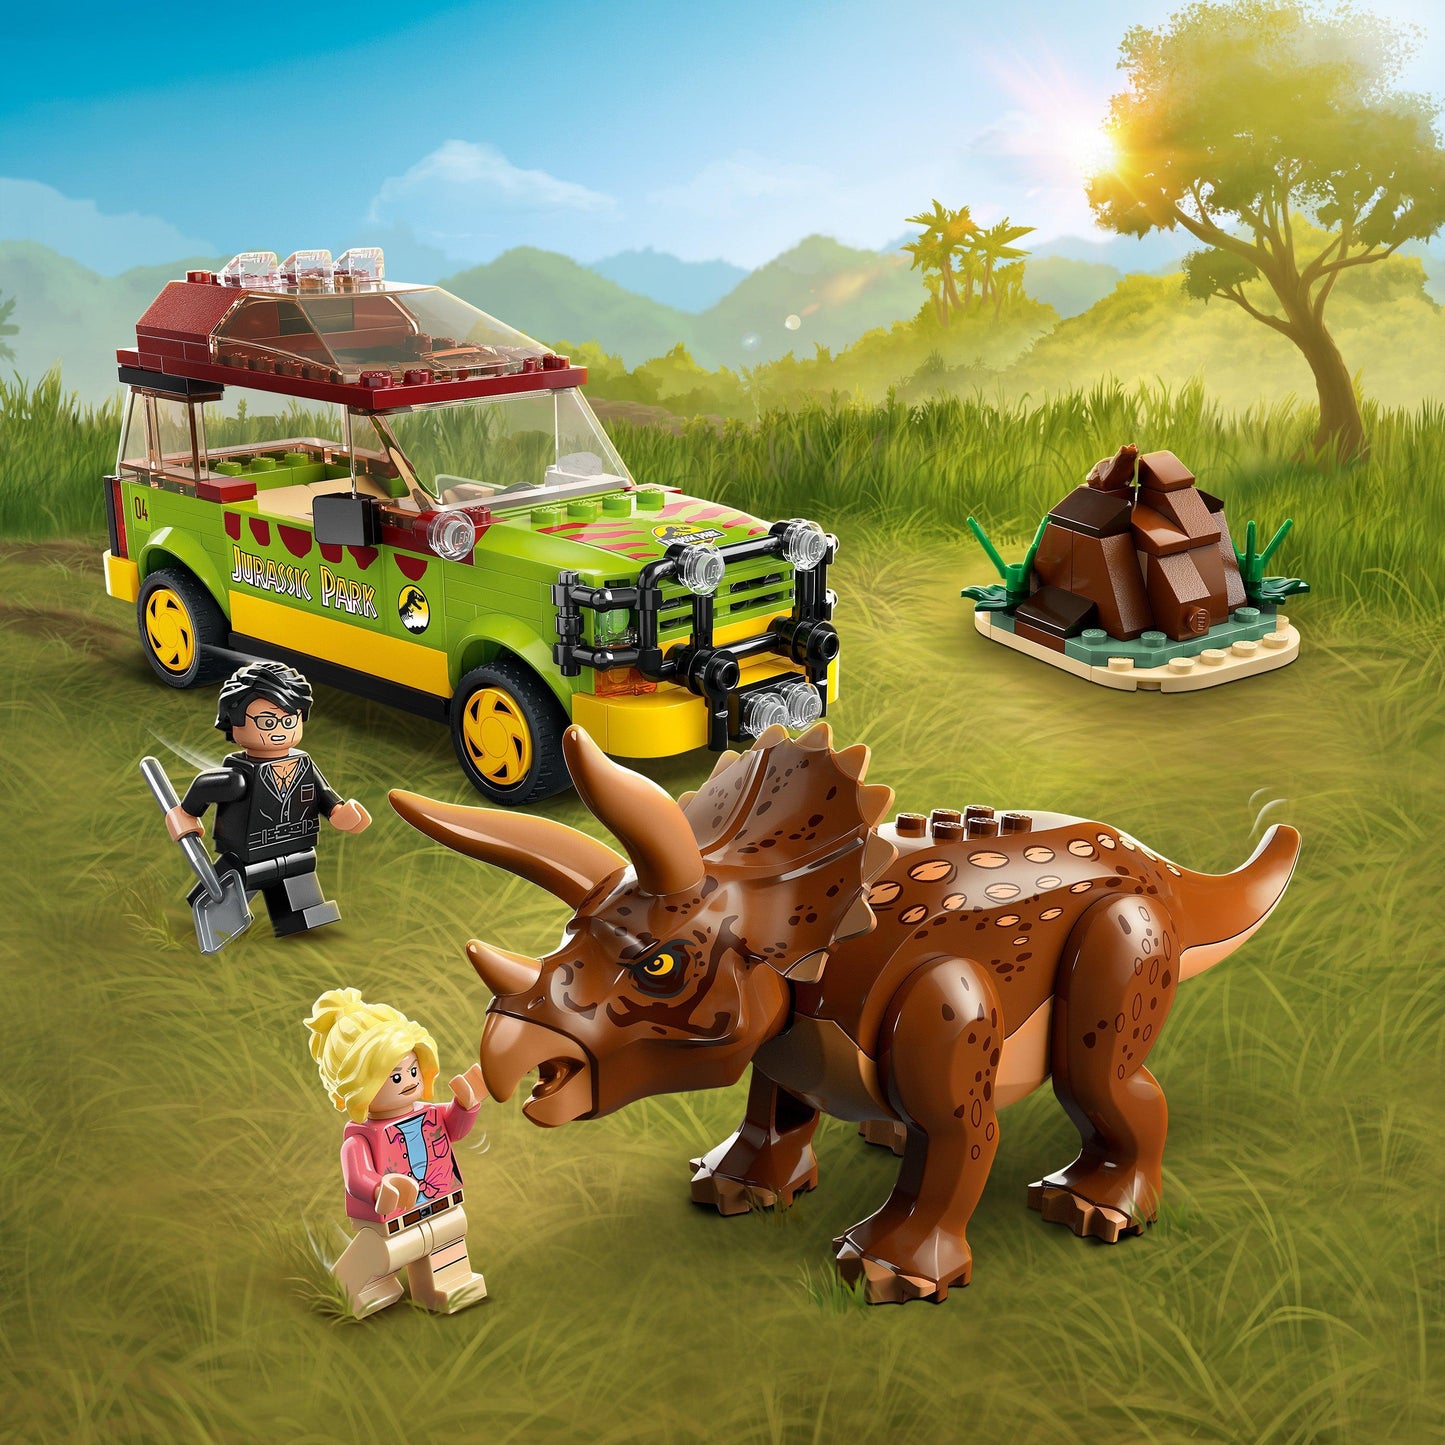 LEGO 76959 Triceraptops onderzoek | 2TTOYS ✓ Official shop<br>